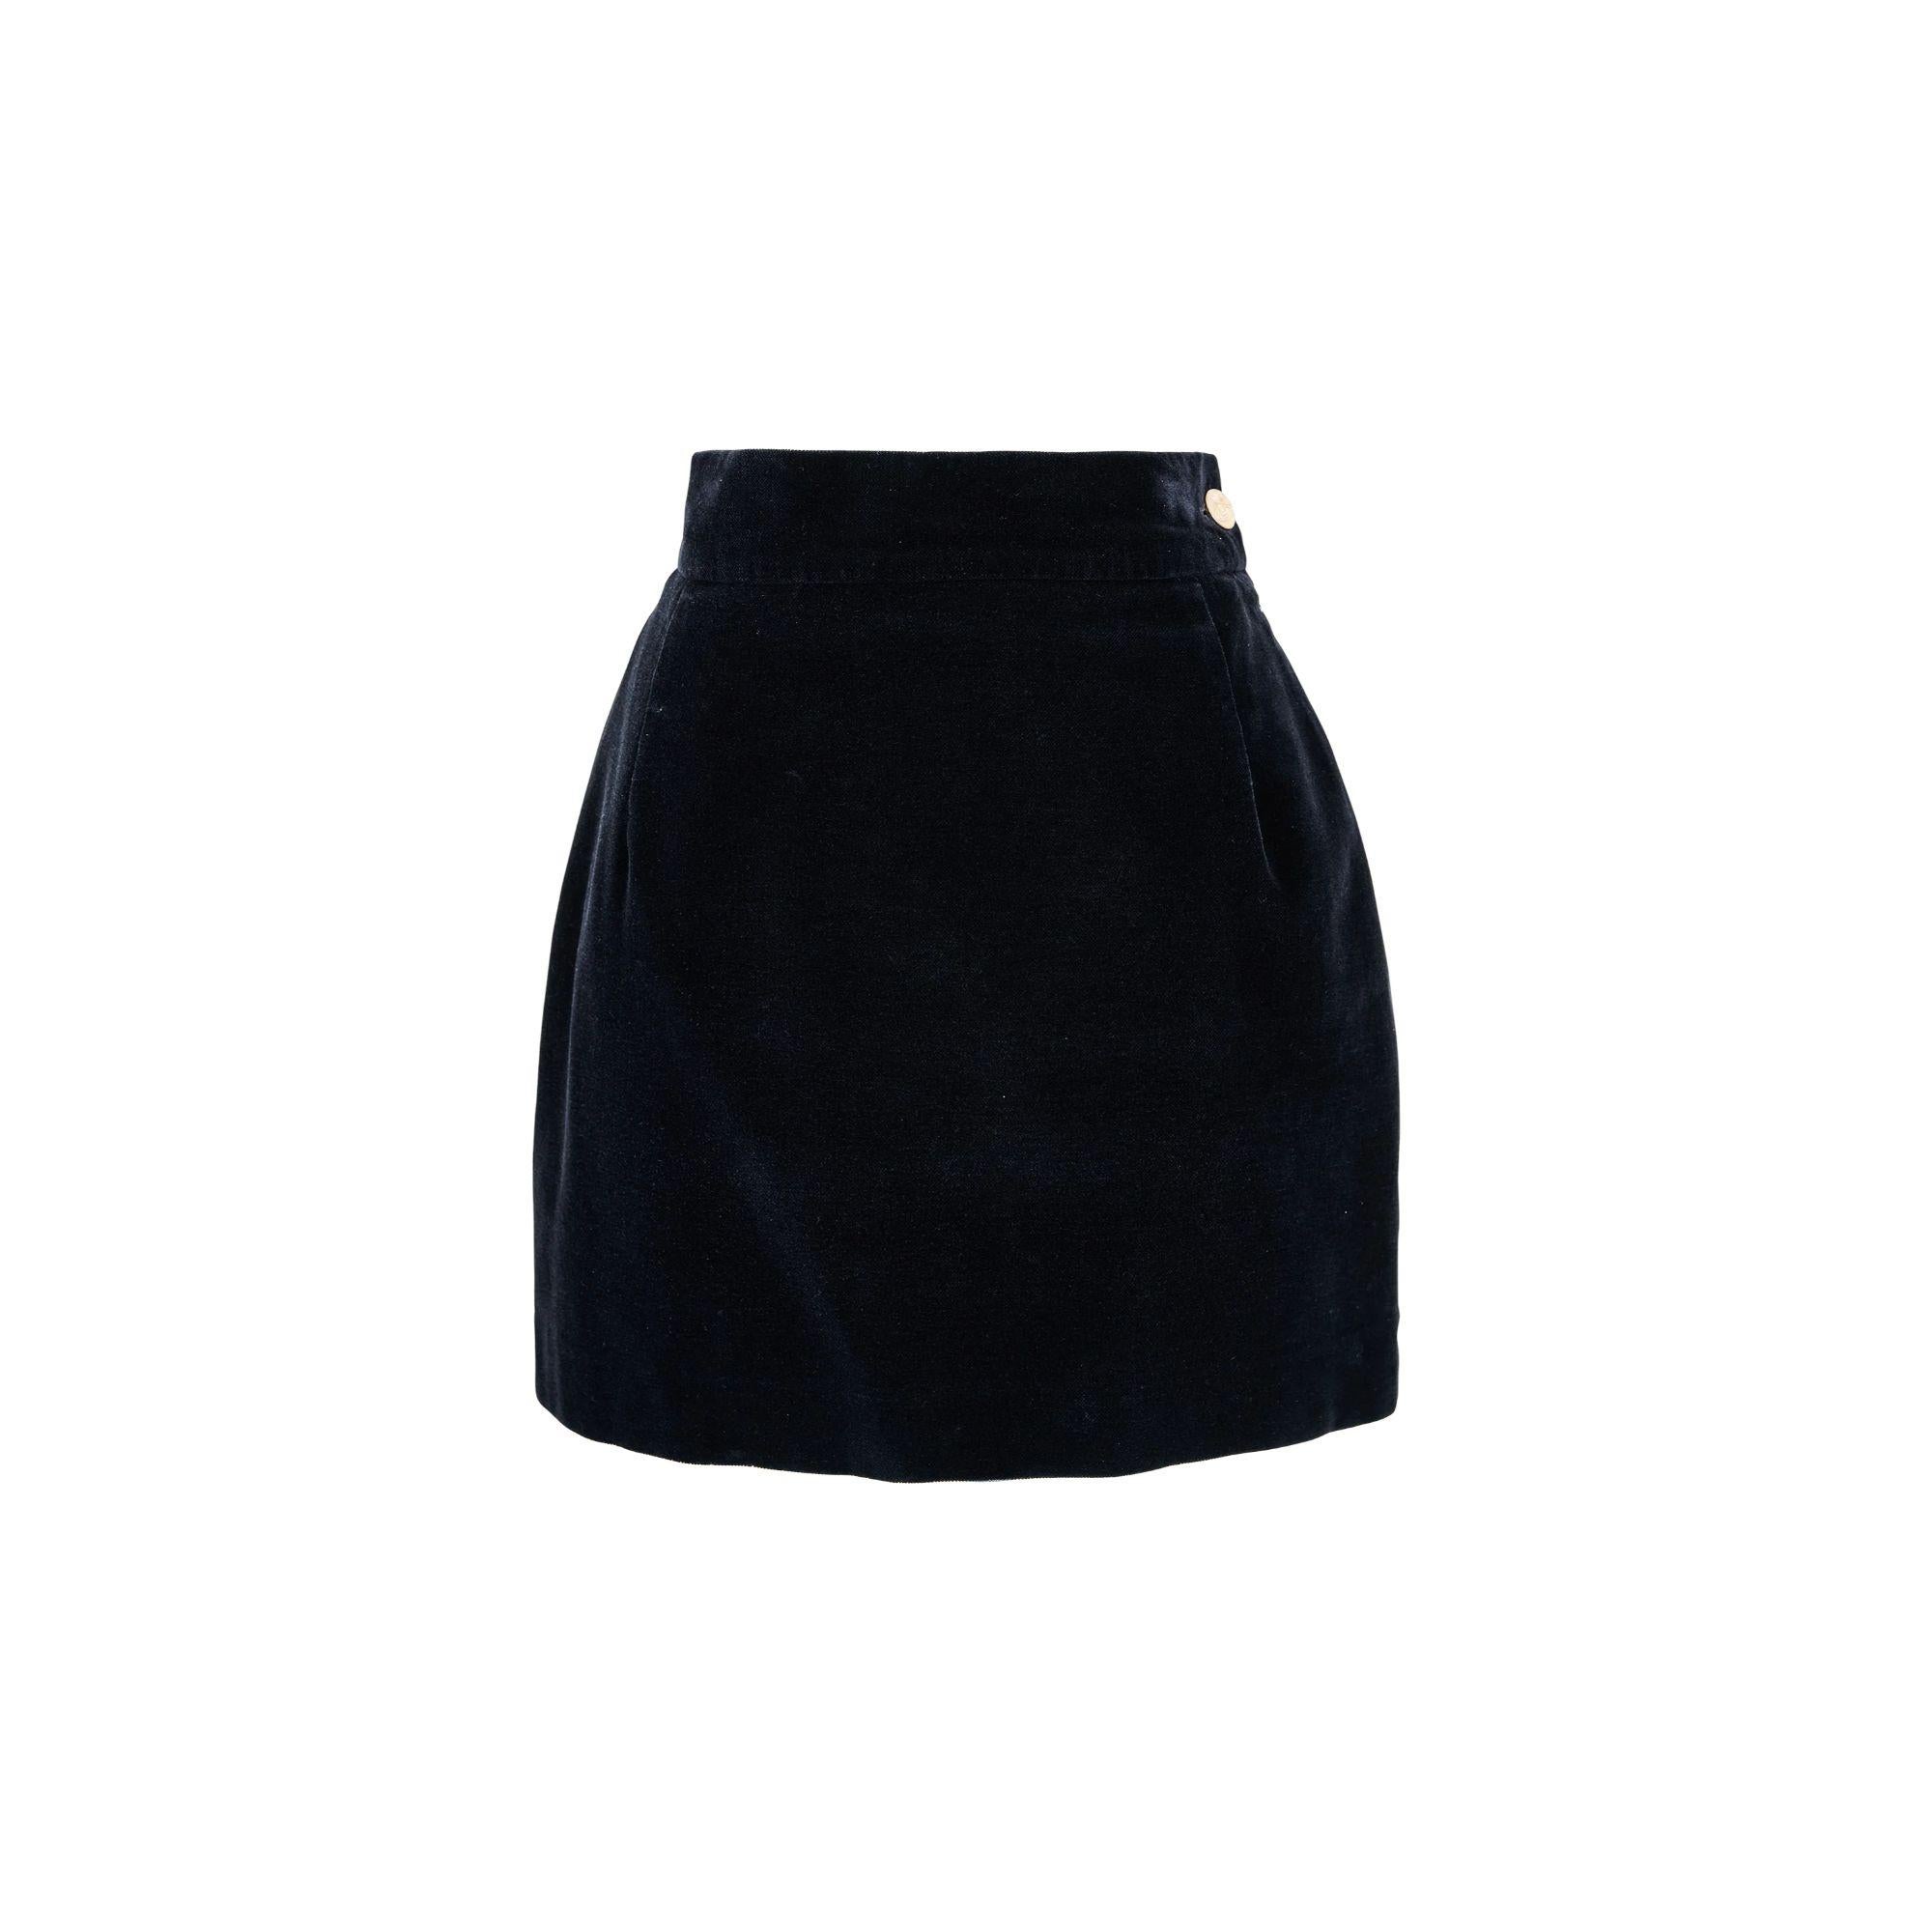 S/S 1995 Vivienne Westwood 'Erotic Zones' Collection Velvet Skirt 5